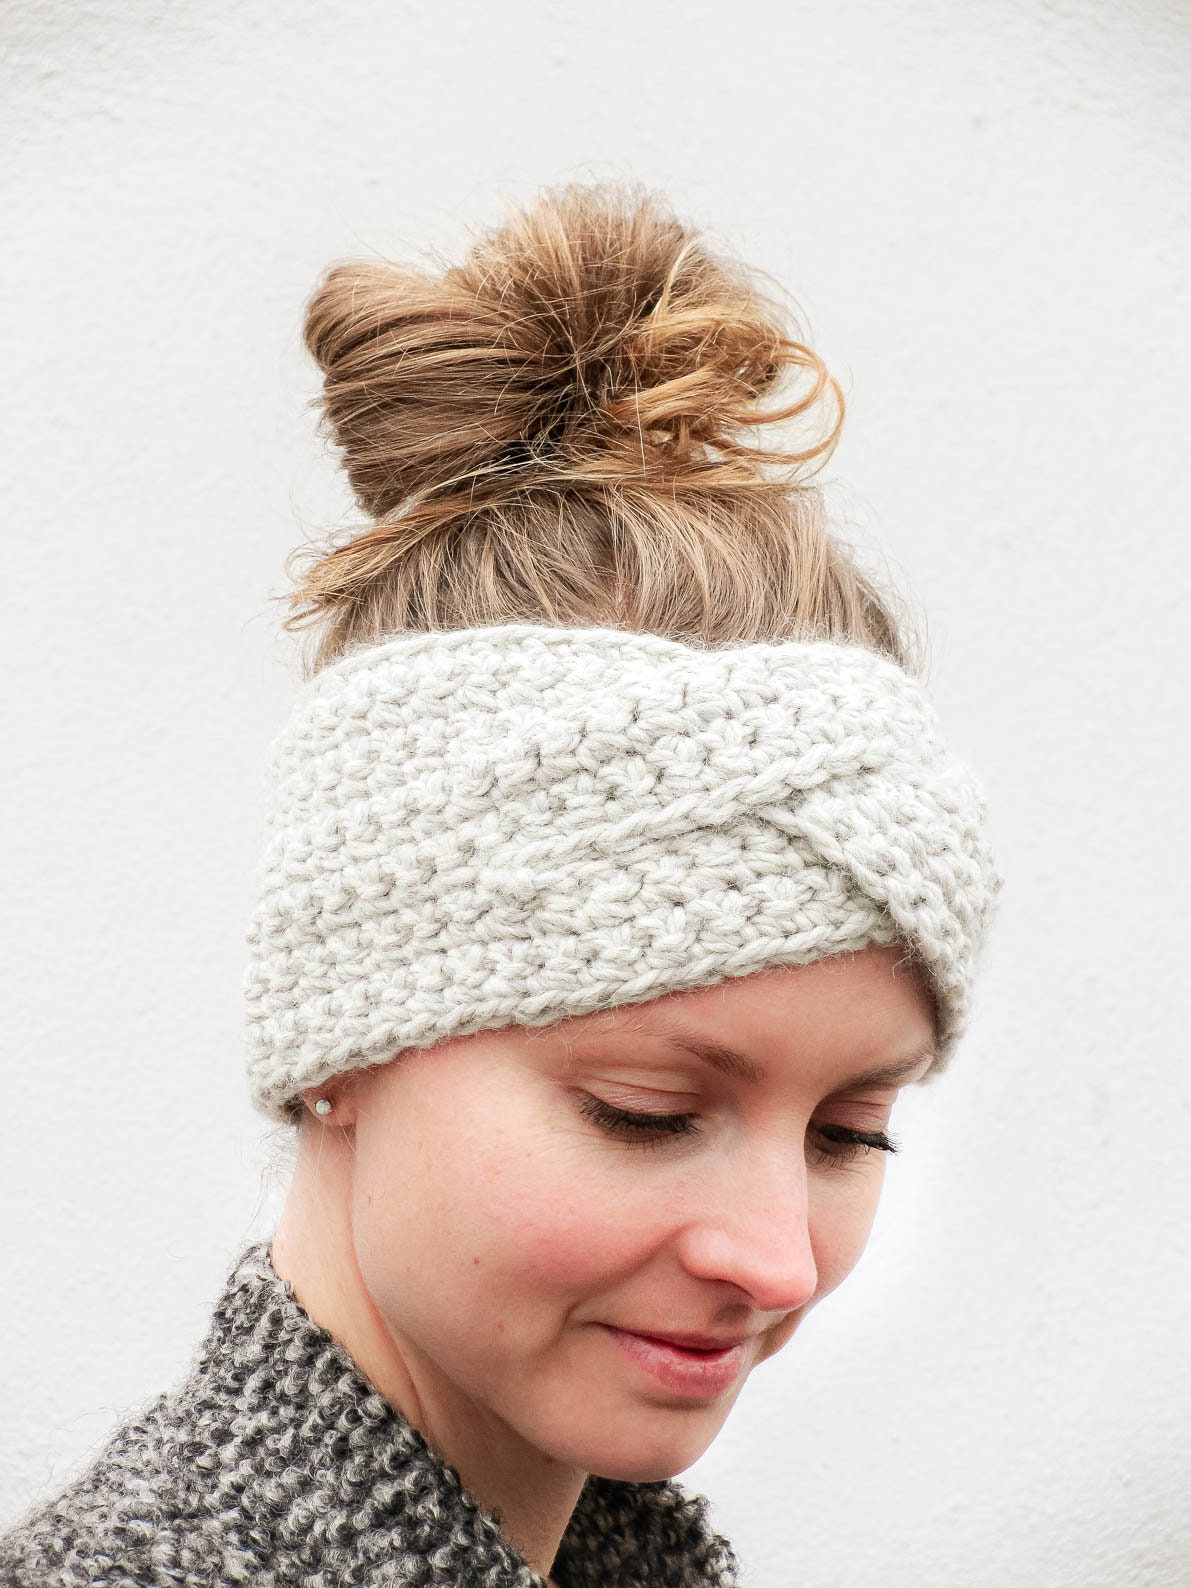 CrissCross Headband - Crochet Pattern